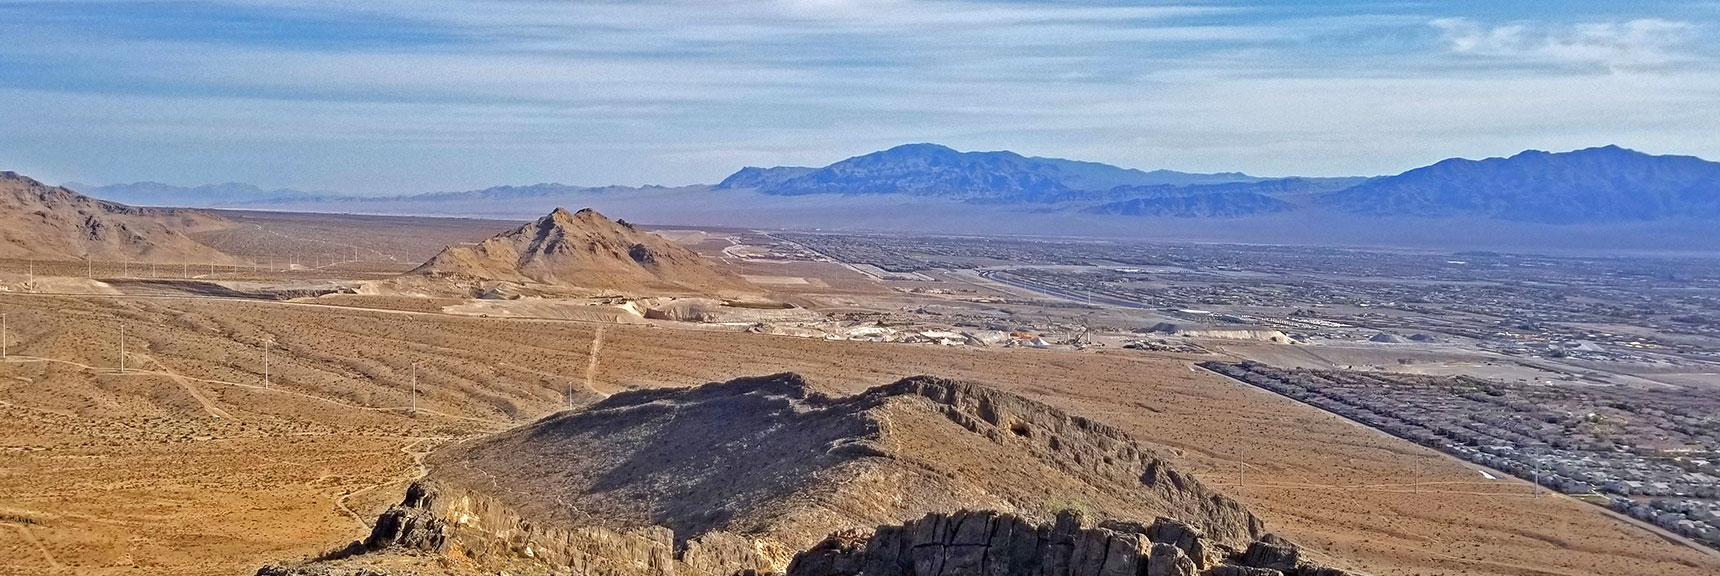 View North Down Cheyenne Mt. Summit Ridge To Sheep Range, Fossil Ridge and Gass Peak | Cheyenne Mountain | Las Vegas, Nevada